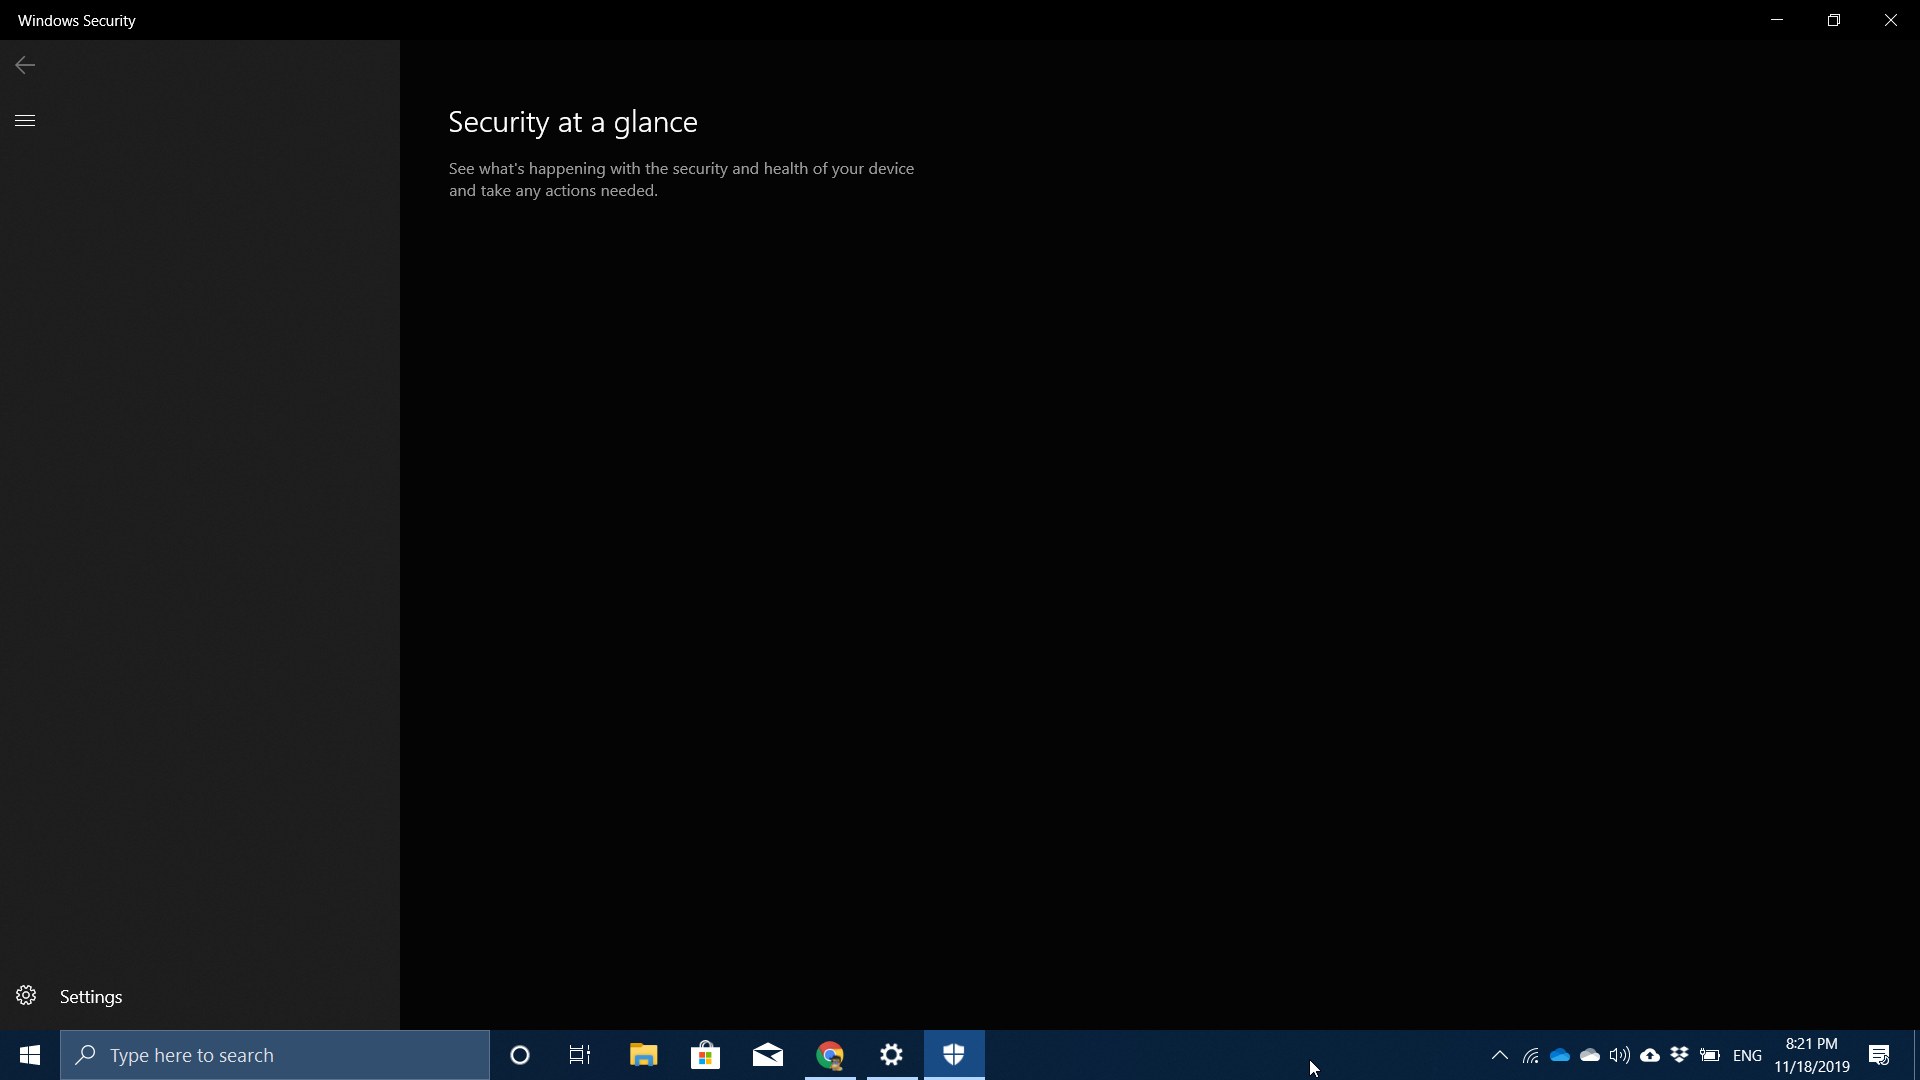 Windows Security 0999a996-1d42-446c-a743-ab1c82afaca9?upload=true.png